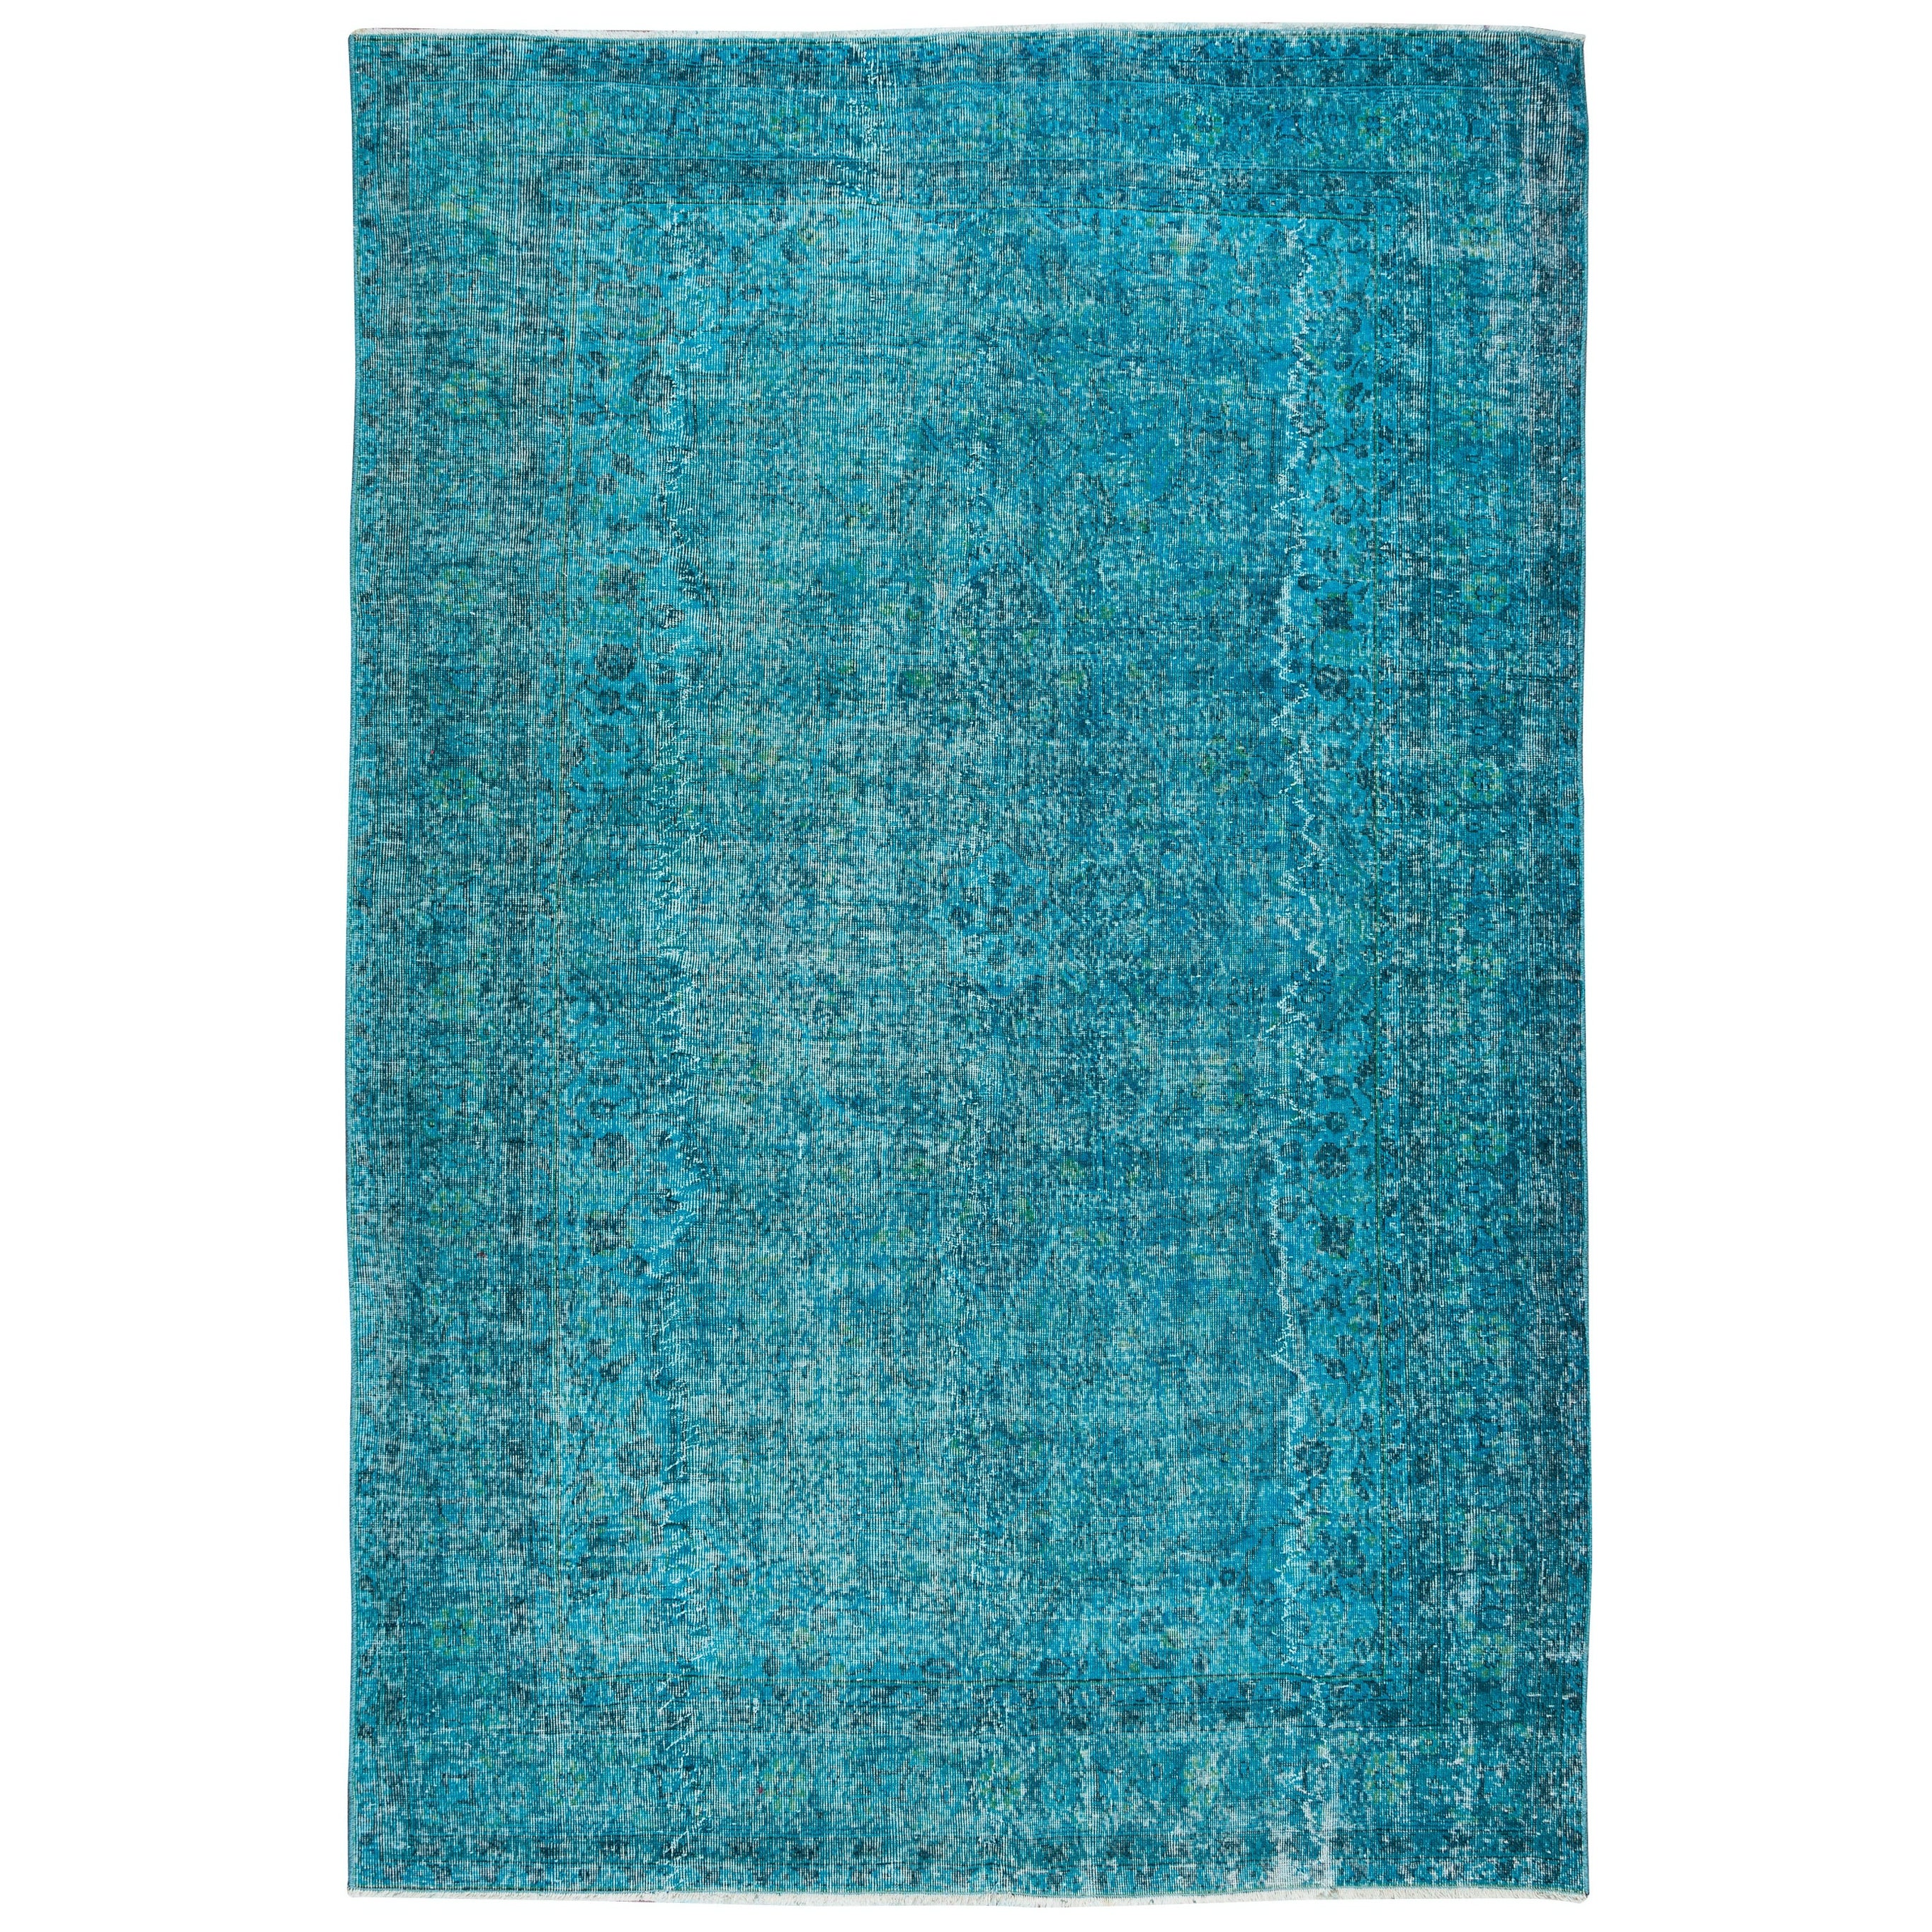 6.7x10 Ft Handmade Vintage Anatolian Carpet, Teal Blue Rug for Modern Interiors